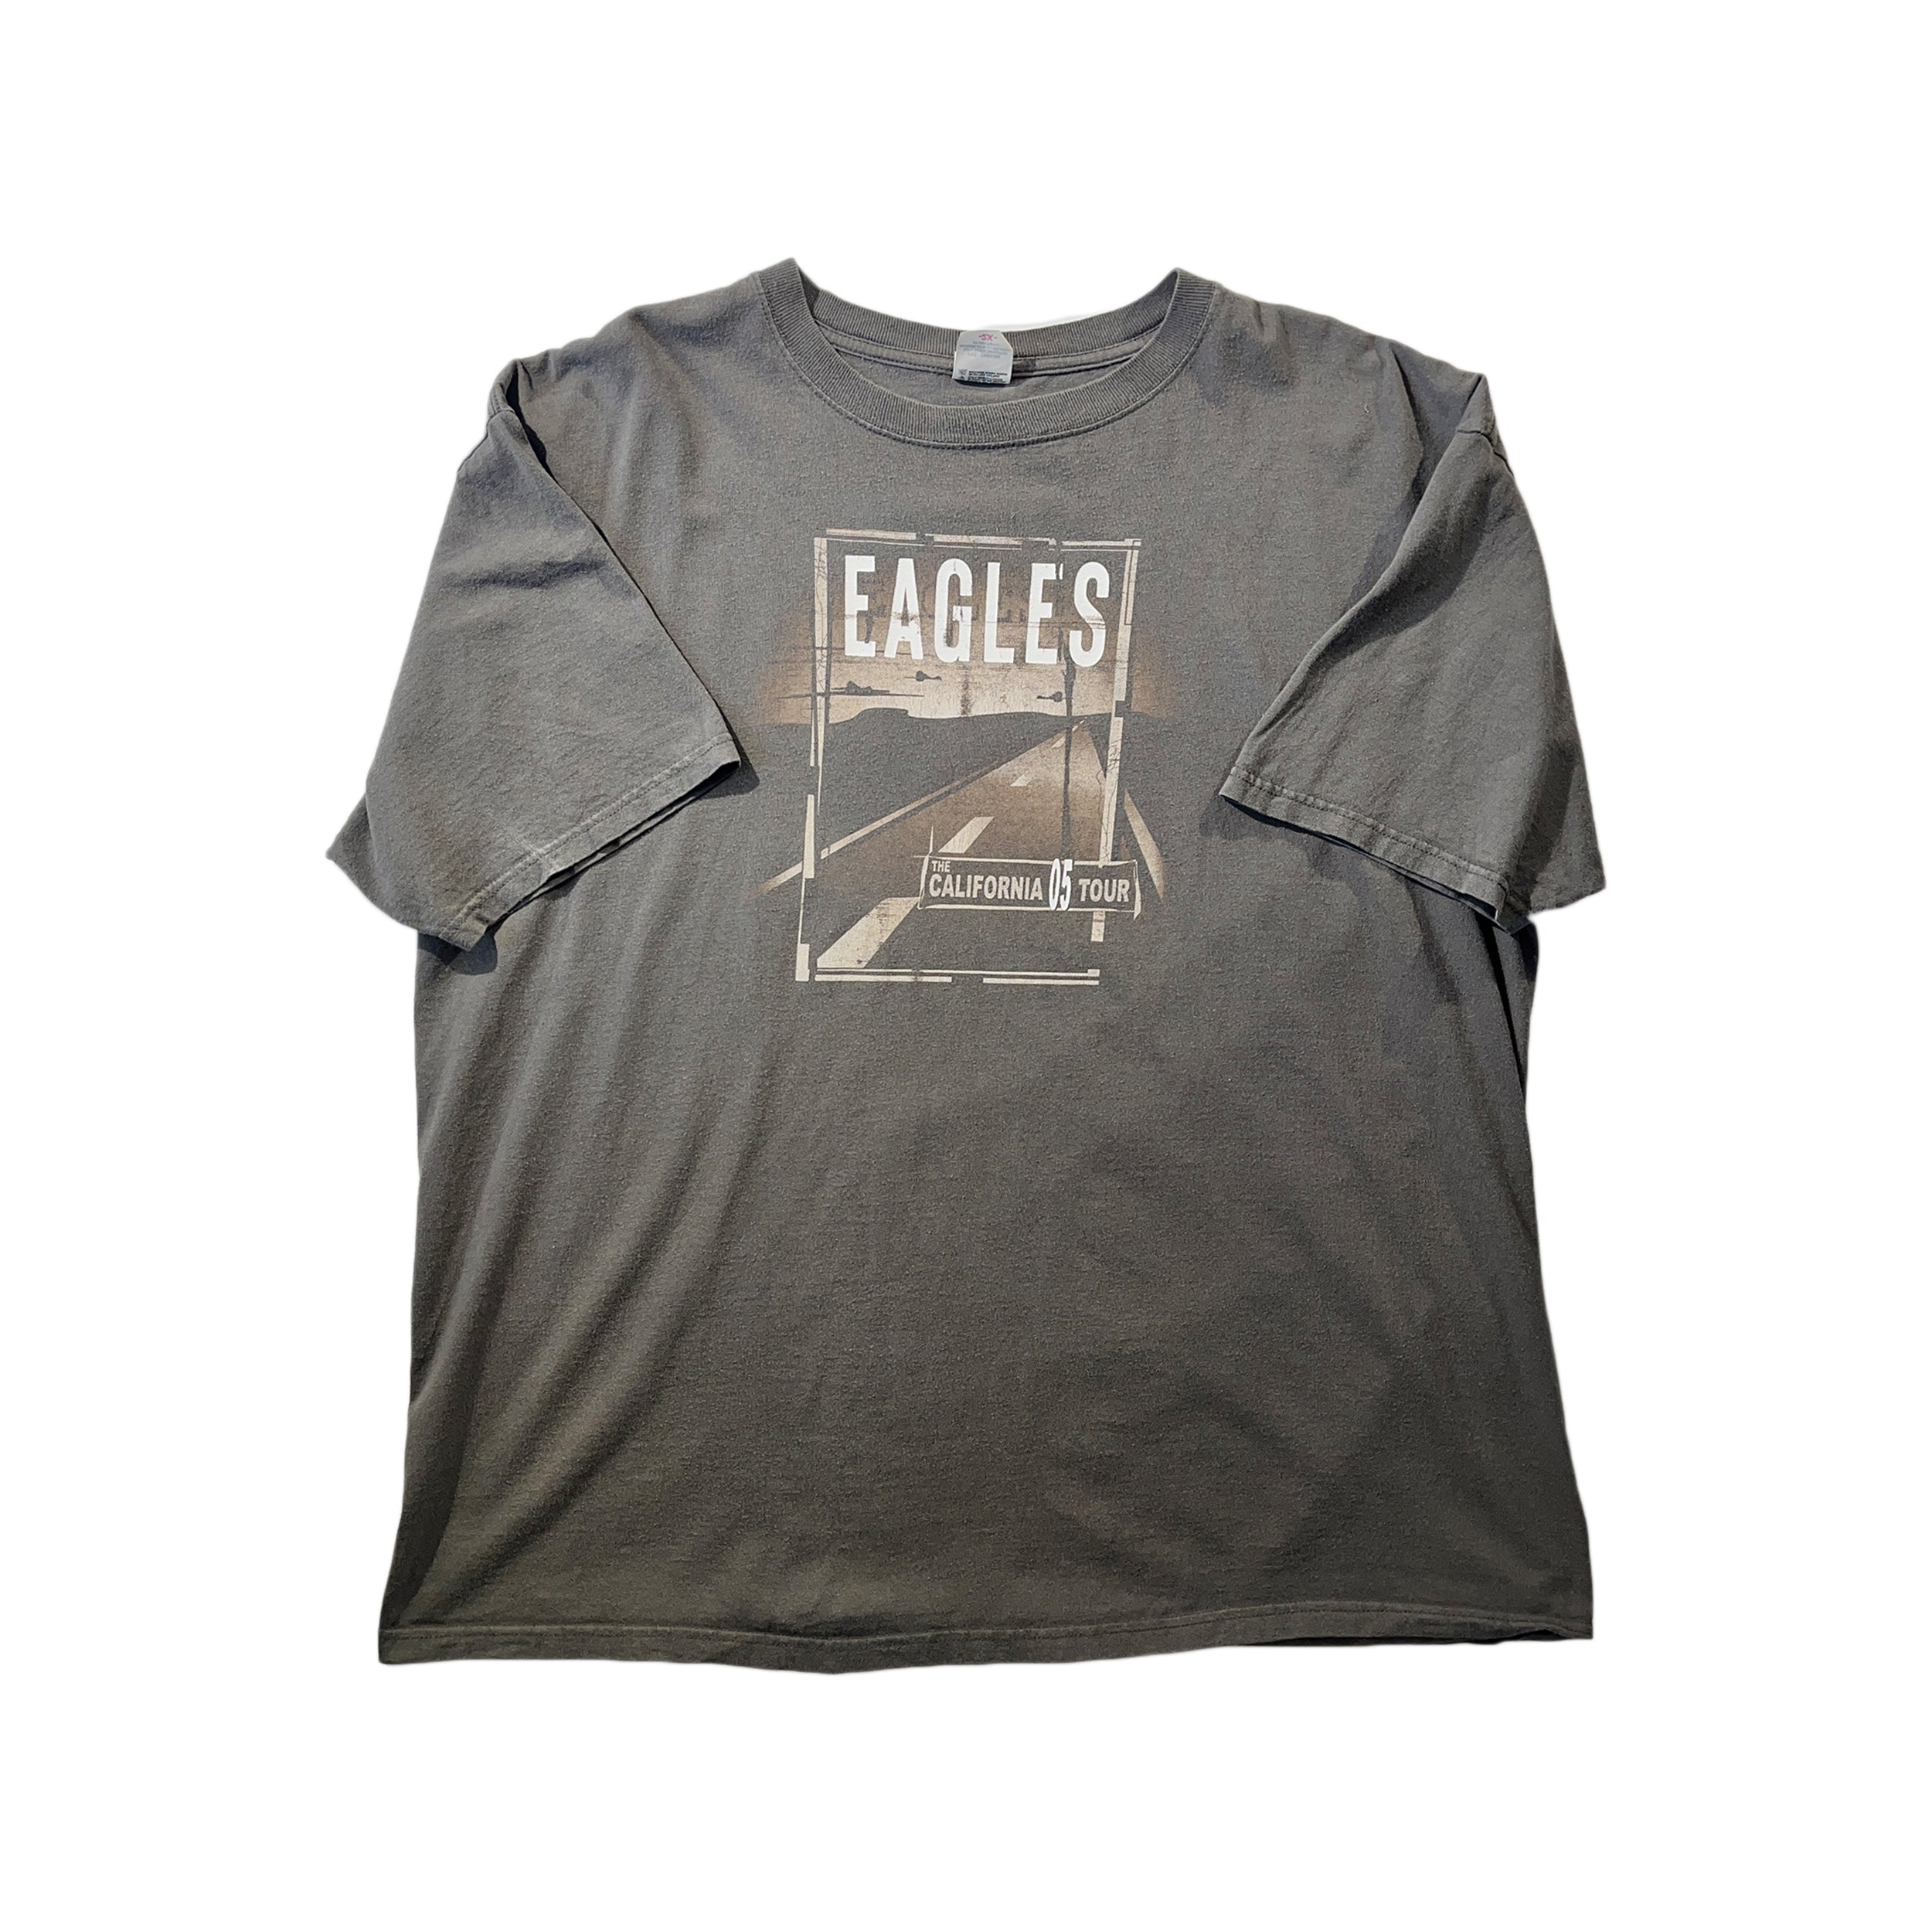 Glorydays Fine Goods Vintage Eagles Band T-Shirt 2005 Y2K Tour Tee